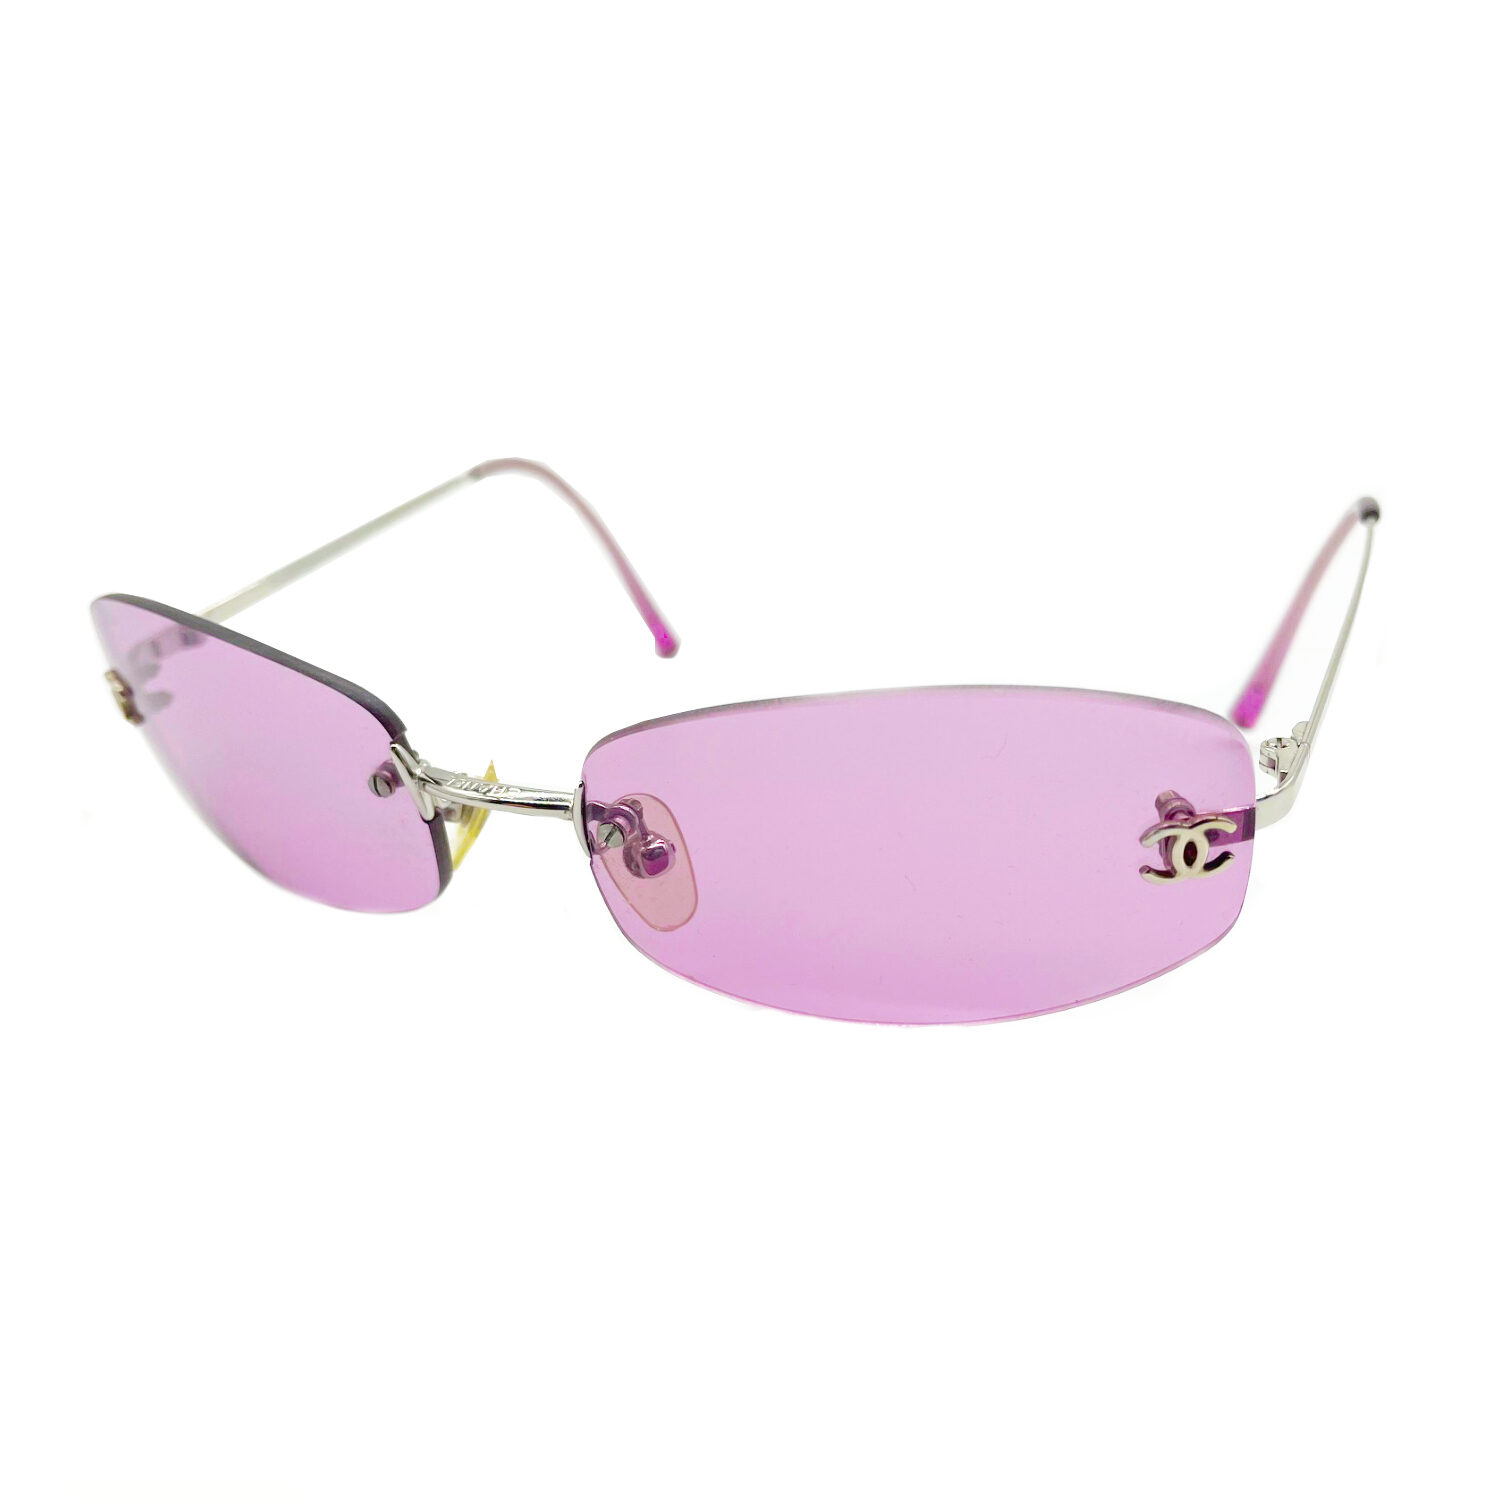 silver chanel sunglasses vintage